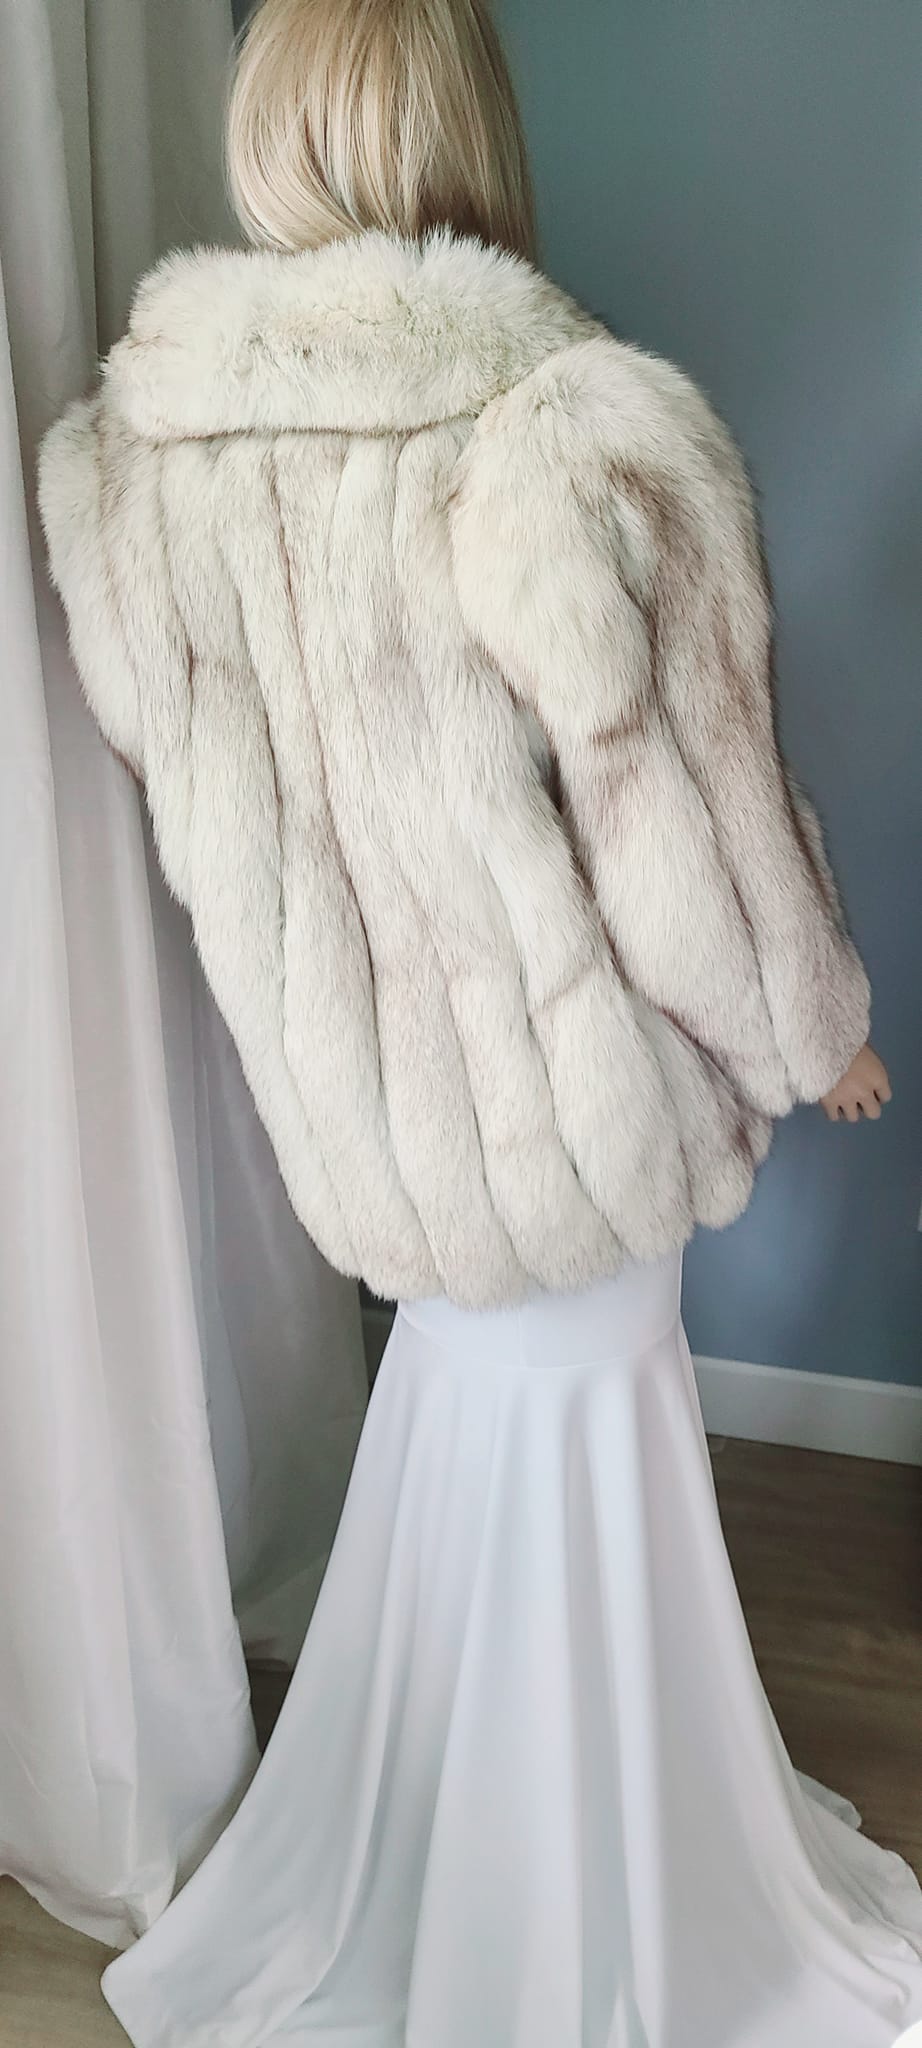 Luxury Vintage Norwegian FOX Fur Coat, REAL FUR Jacket, Ivory Arctic Fox Fur  Bridal Fur, Dream Winter Wedding Fur Accessory, Retro Hollywood Glamour,  Gatsby Party Fur